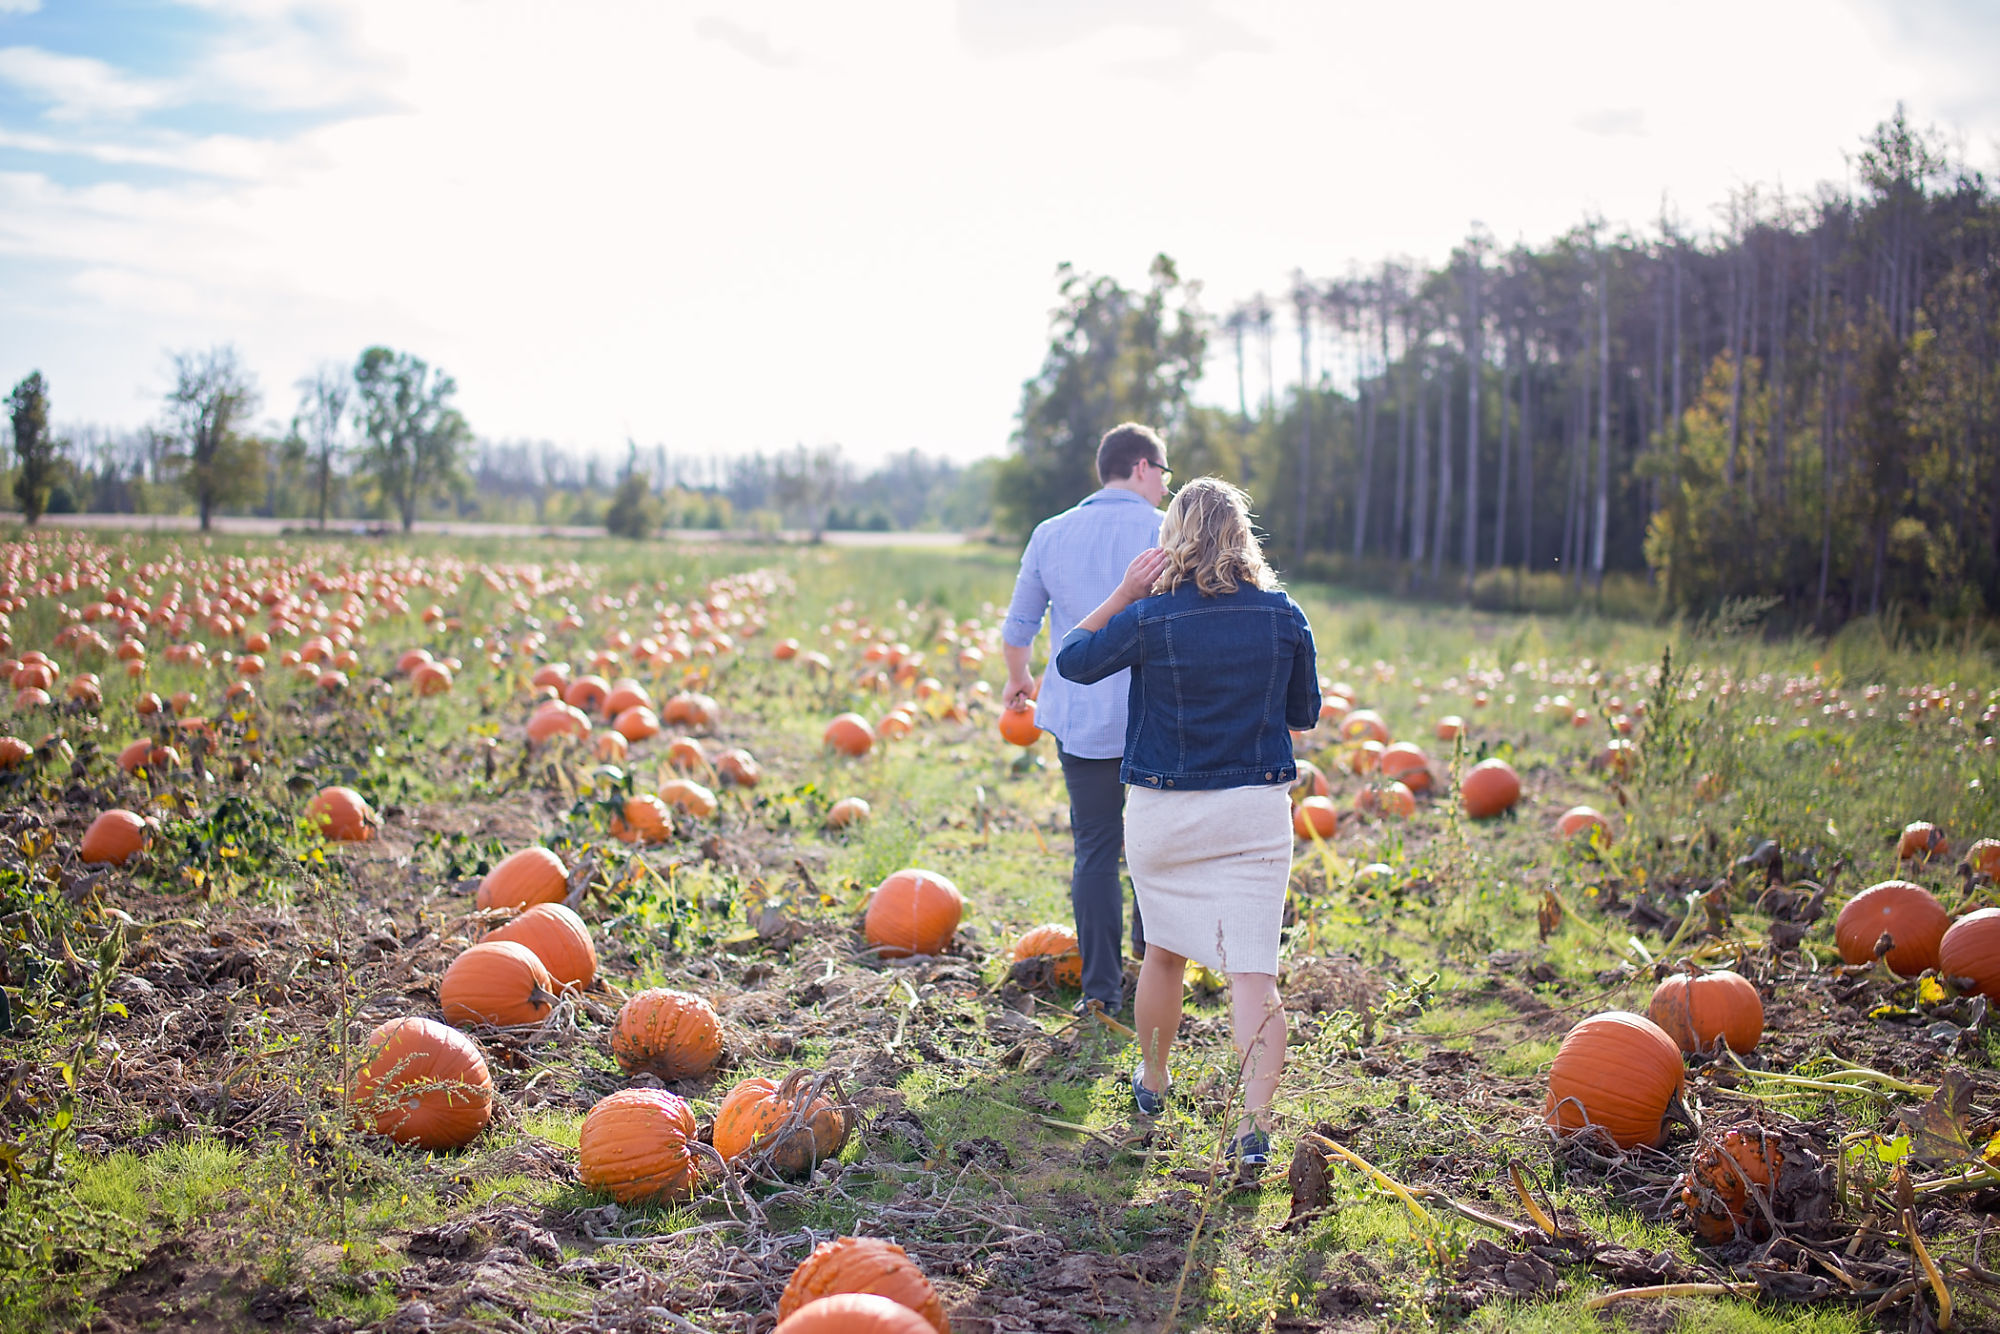 Walking through the pumpkin patch during their engagement shoot with Waterdown Engagement Photographer Jennifer Blaak.